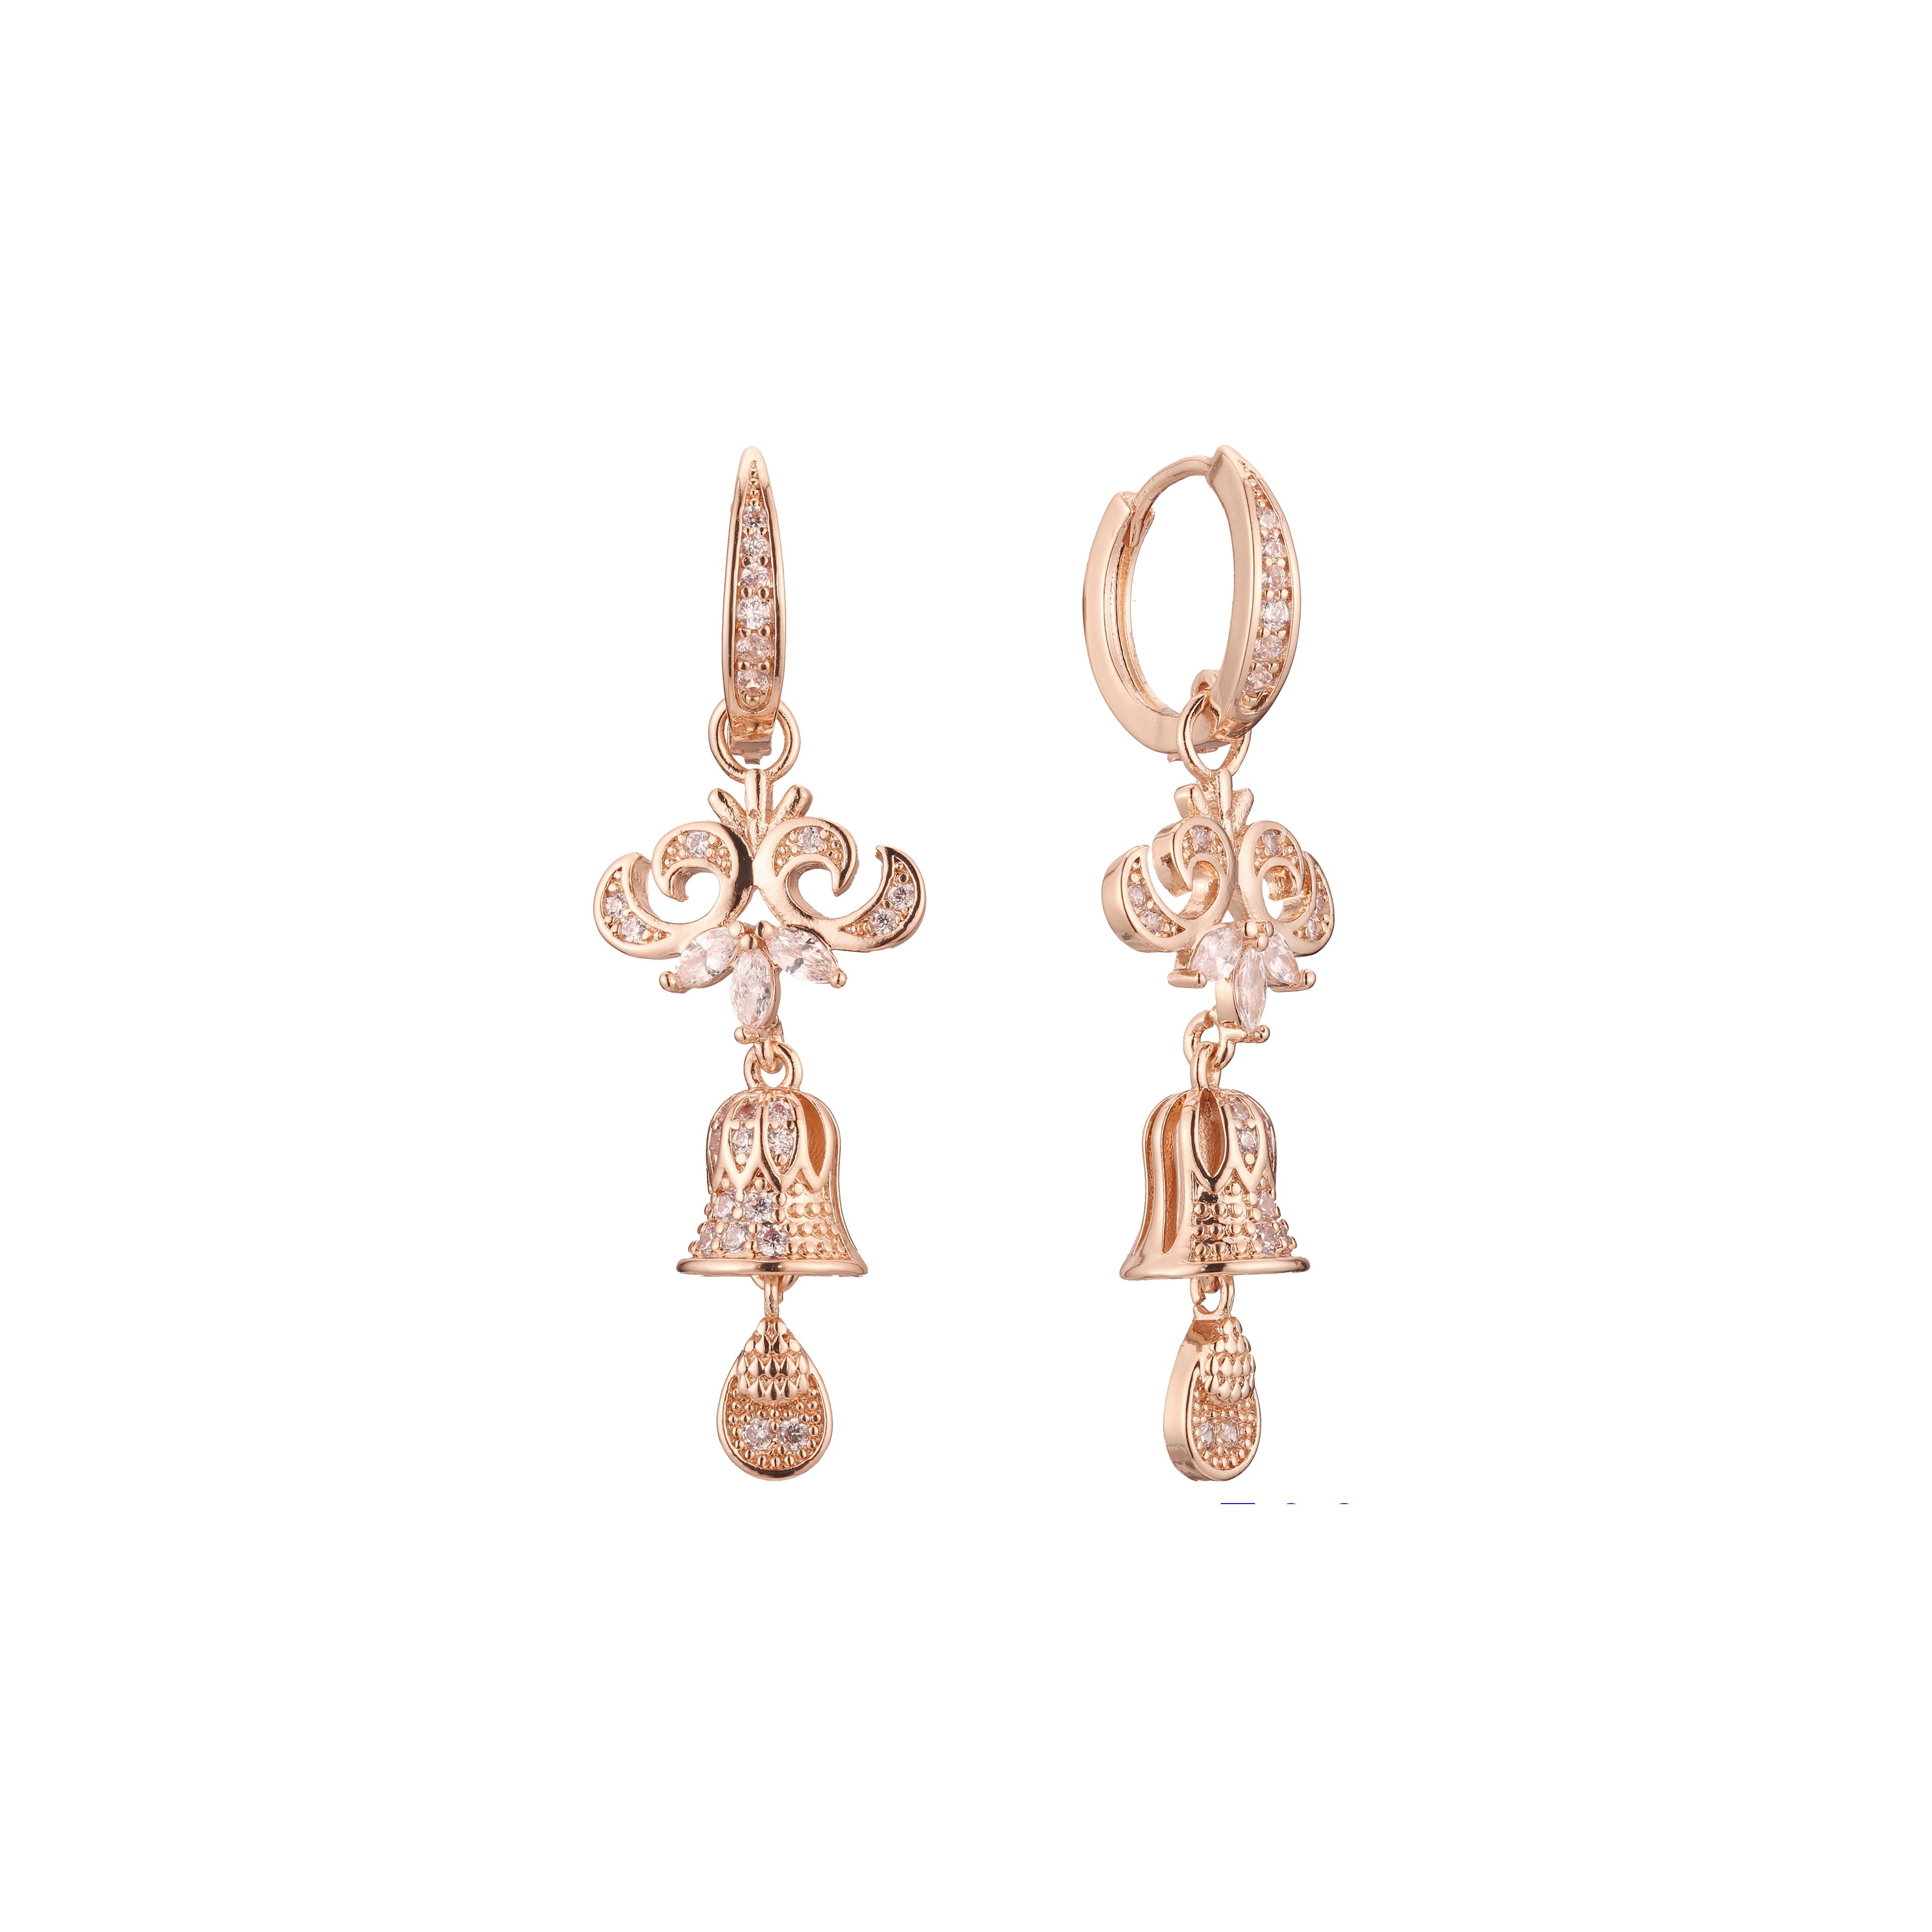 Leaves cluster chandelier drop huggie earrings in 14K Gold, Rose Gold plating colors